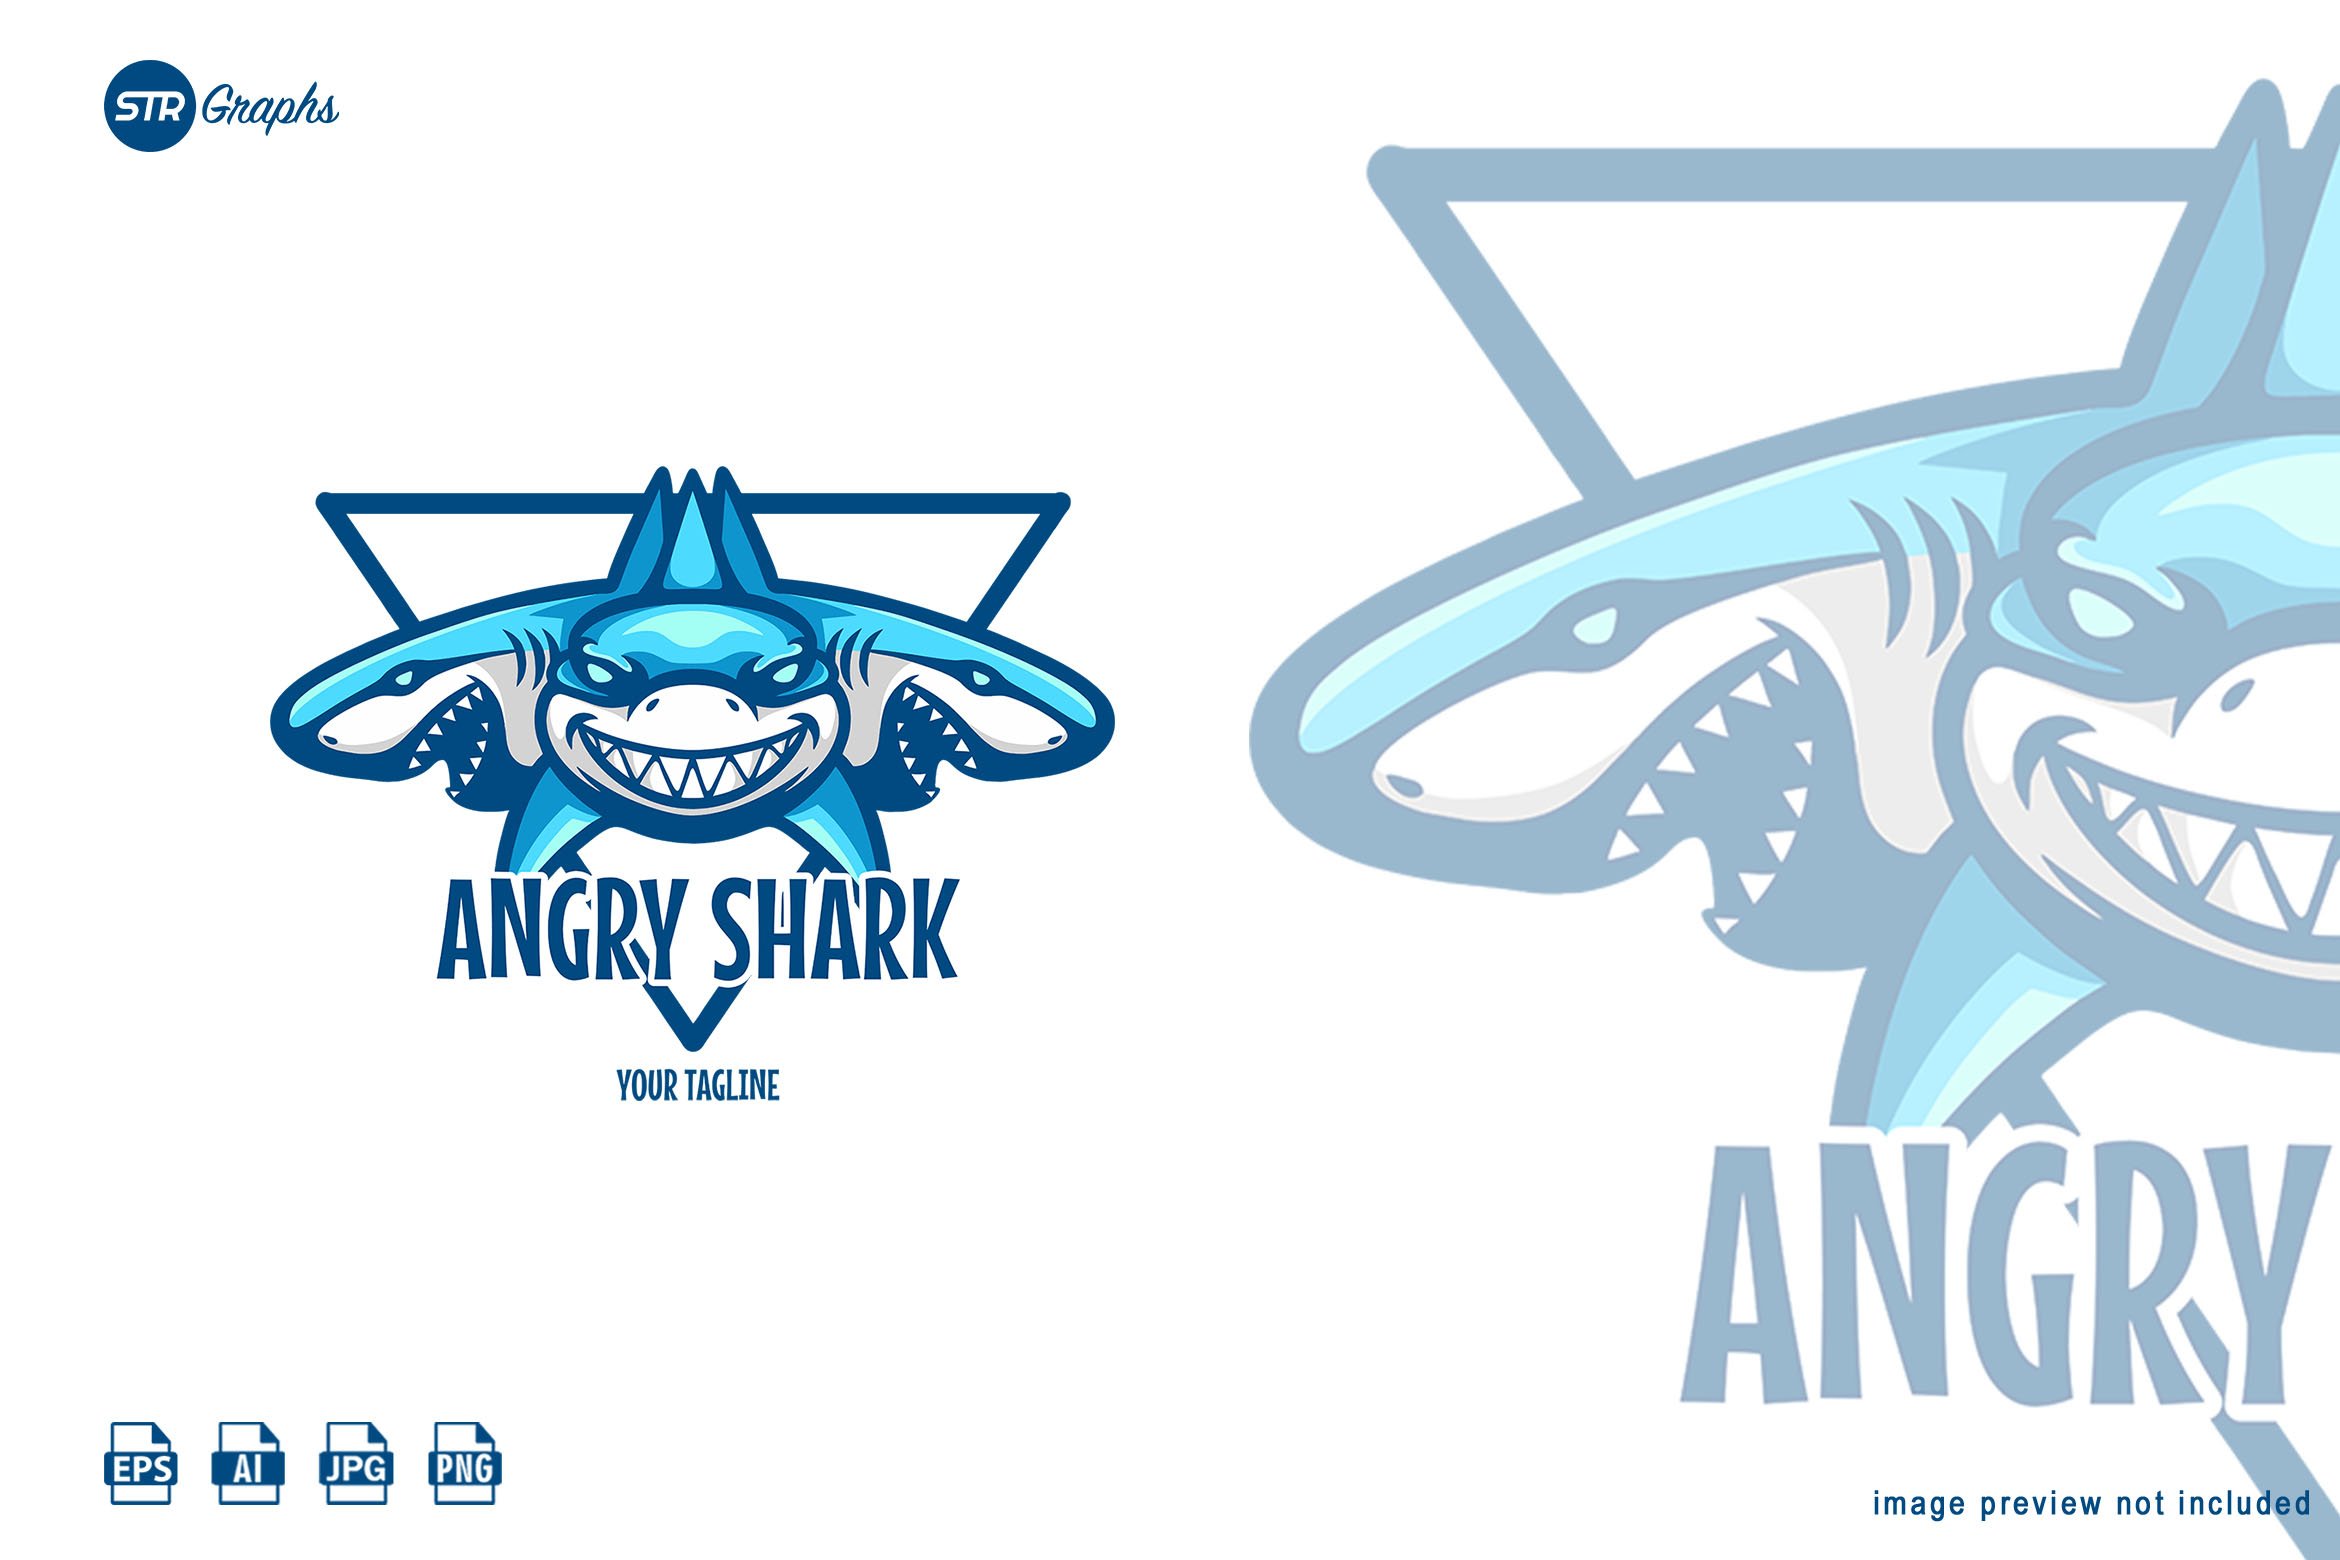 Angry Shark - Character Logo cover image.